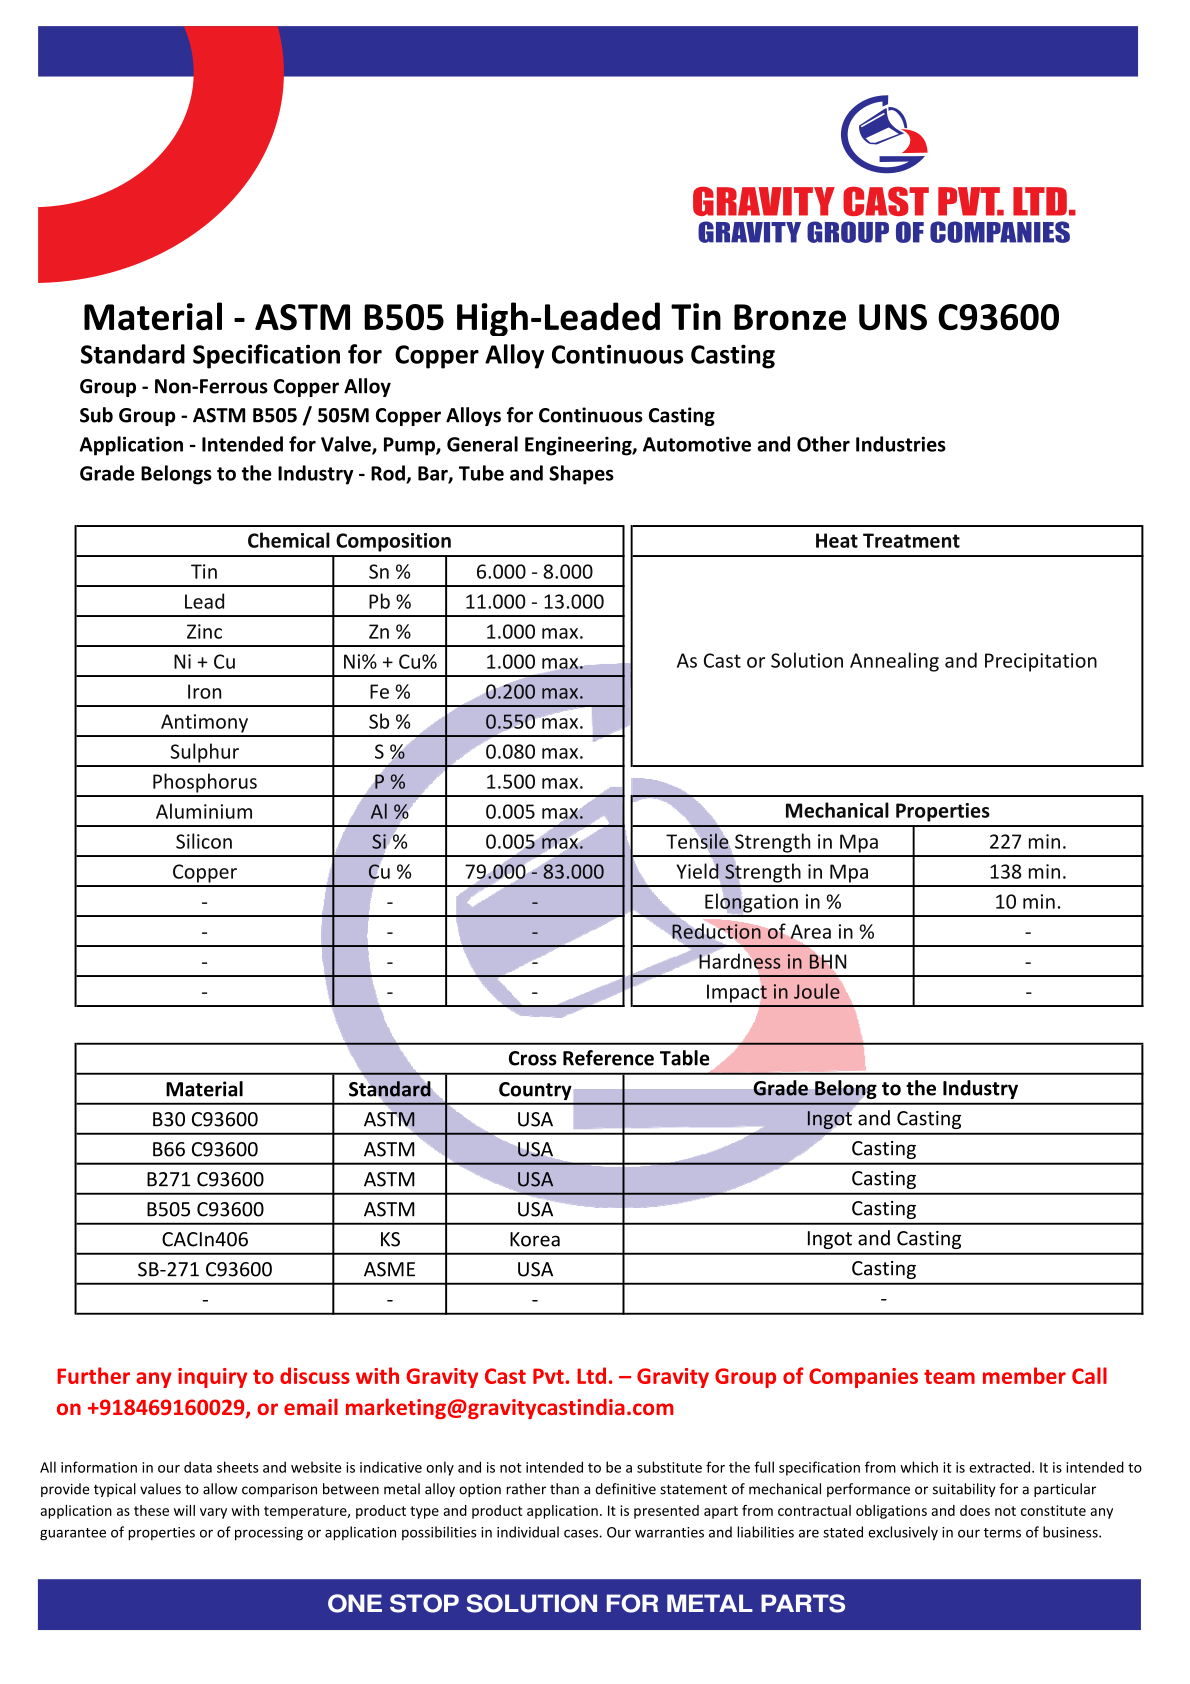 ASTM B505 High-Leaded Tin Bronze UNS C93600.pdf